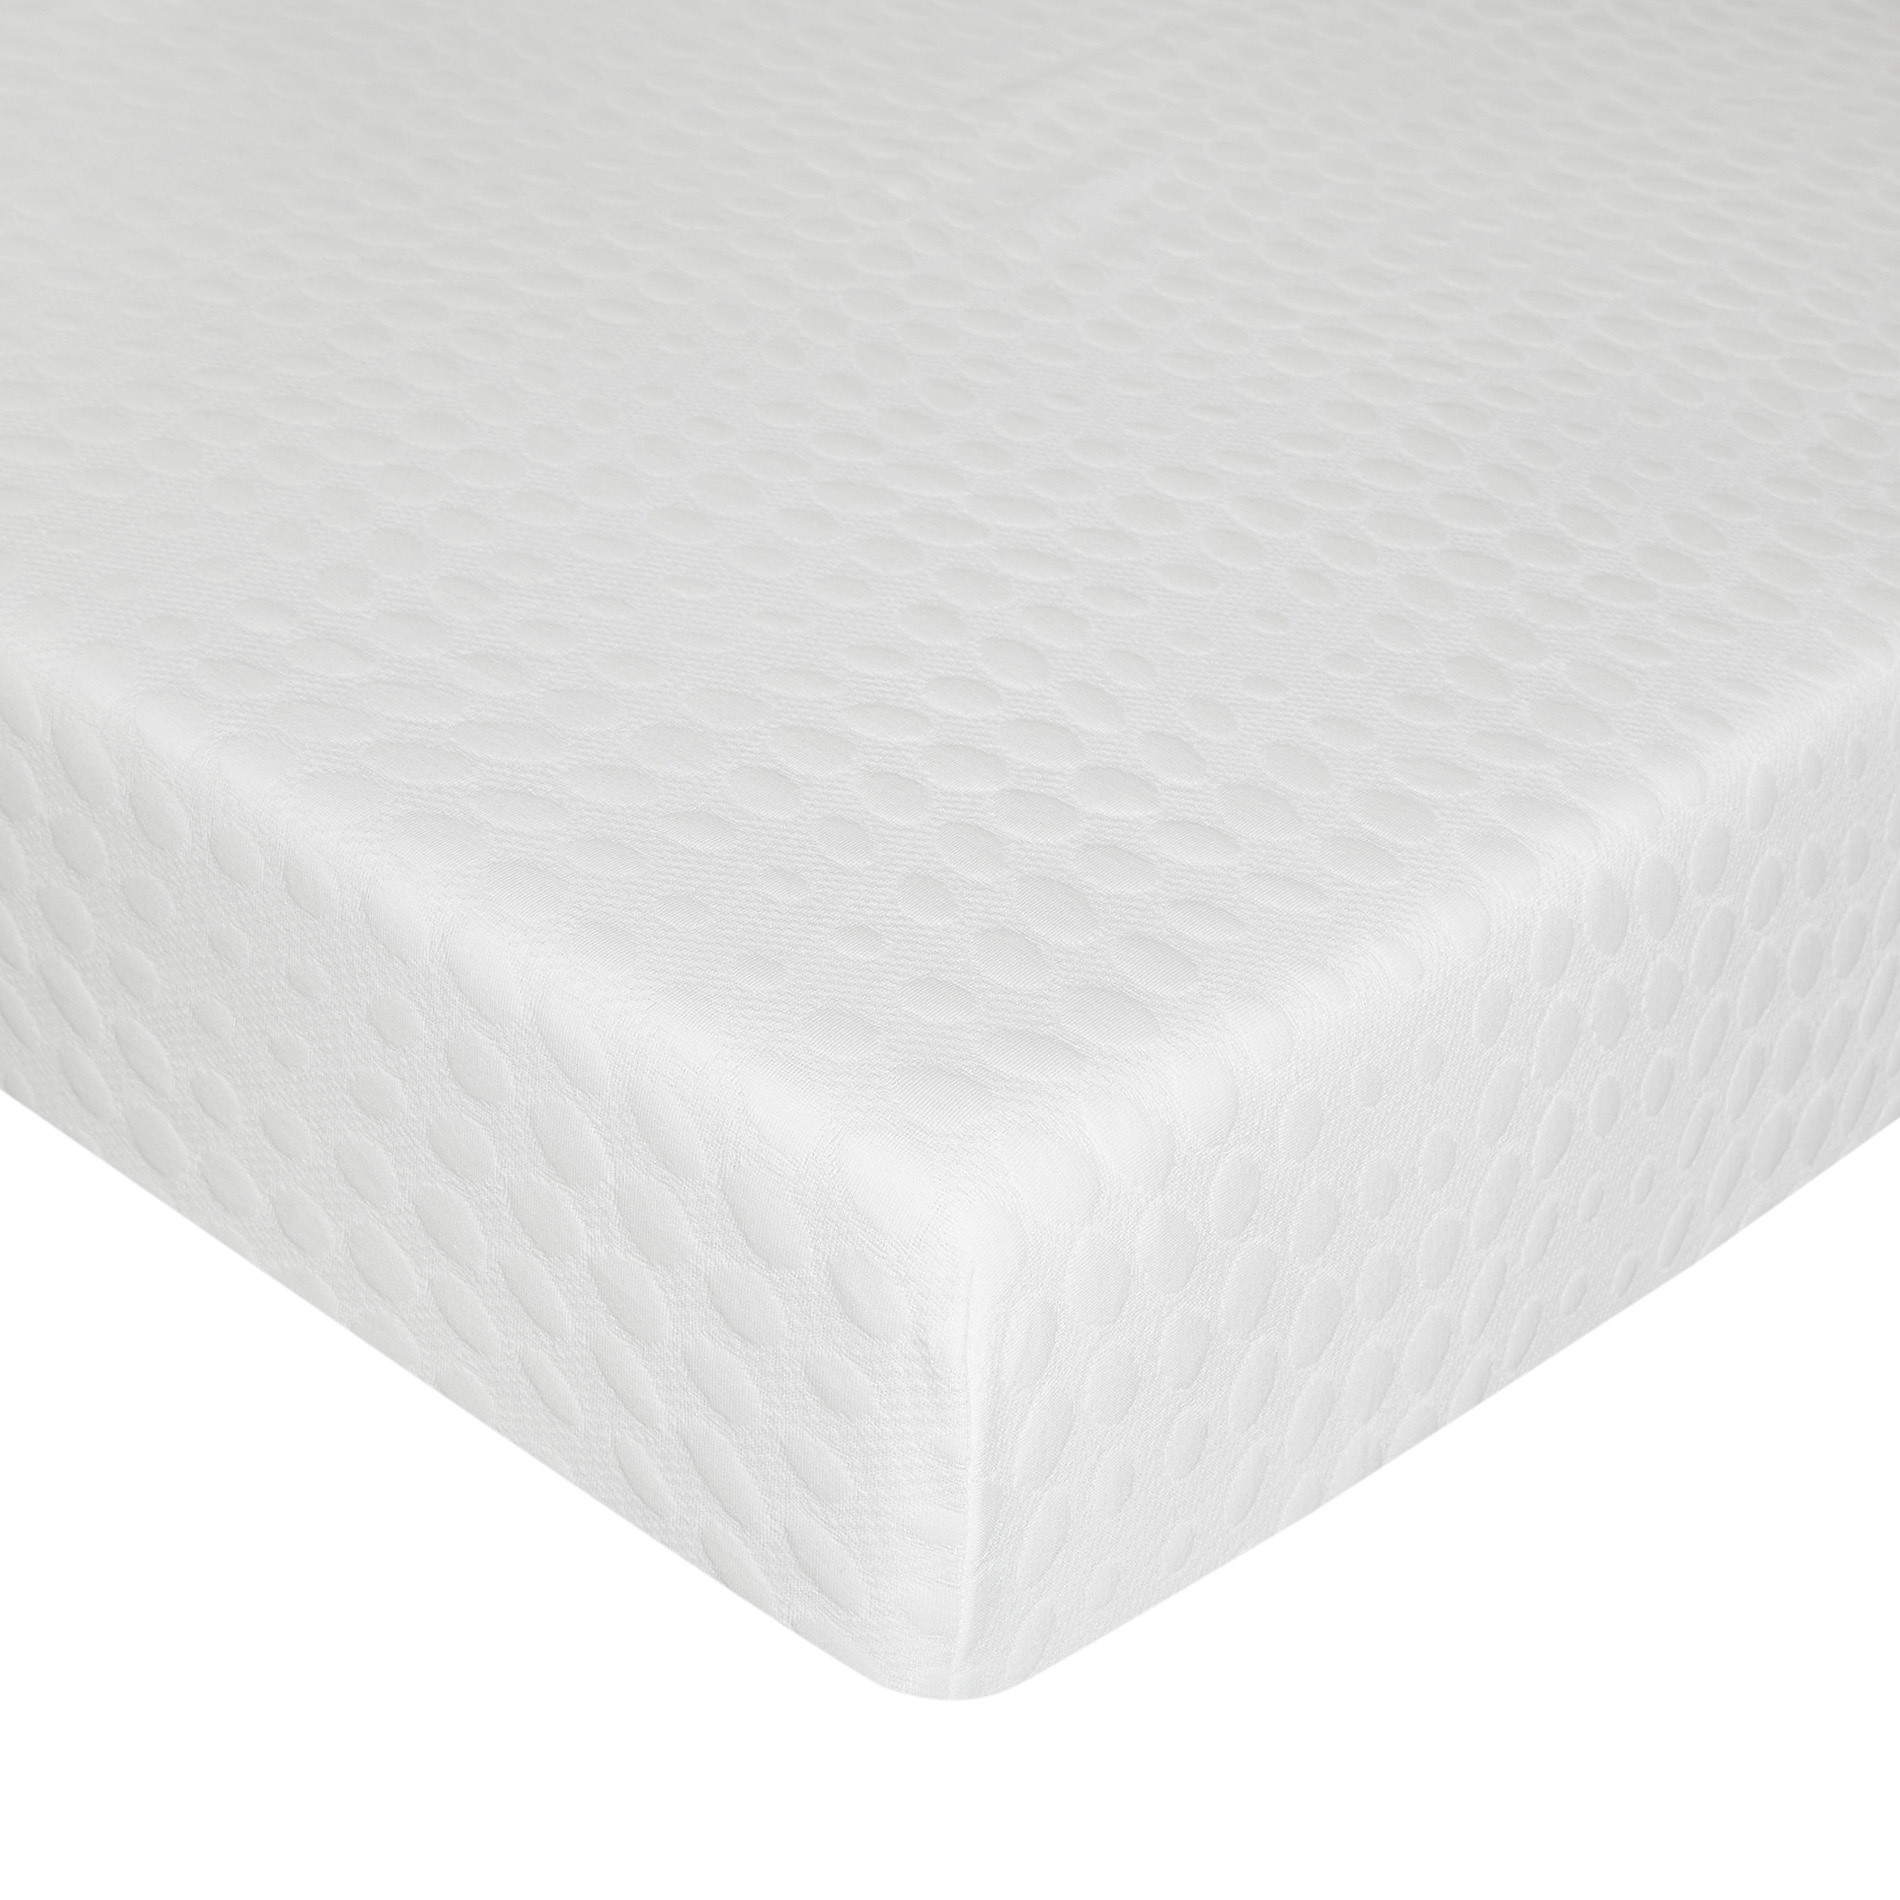 ThreelevelÂ® jacquard mattress cover, White, large image number 0